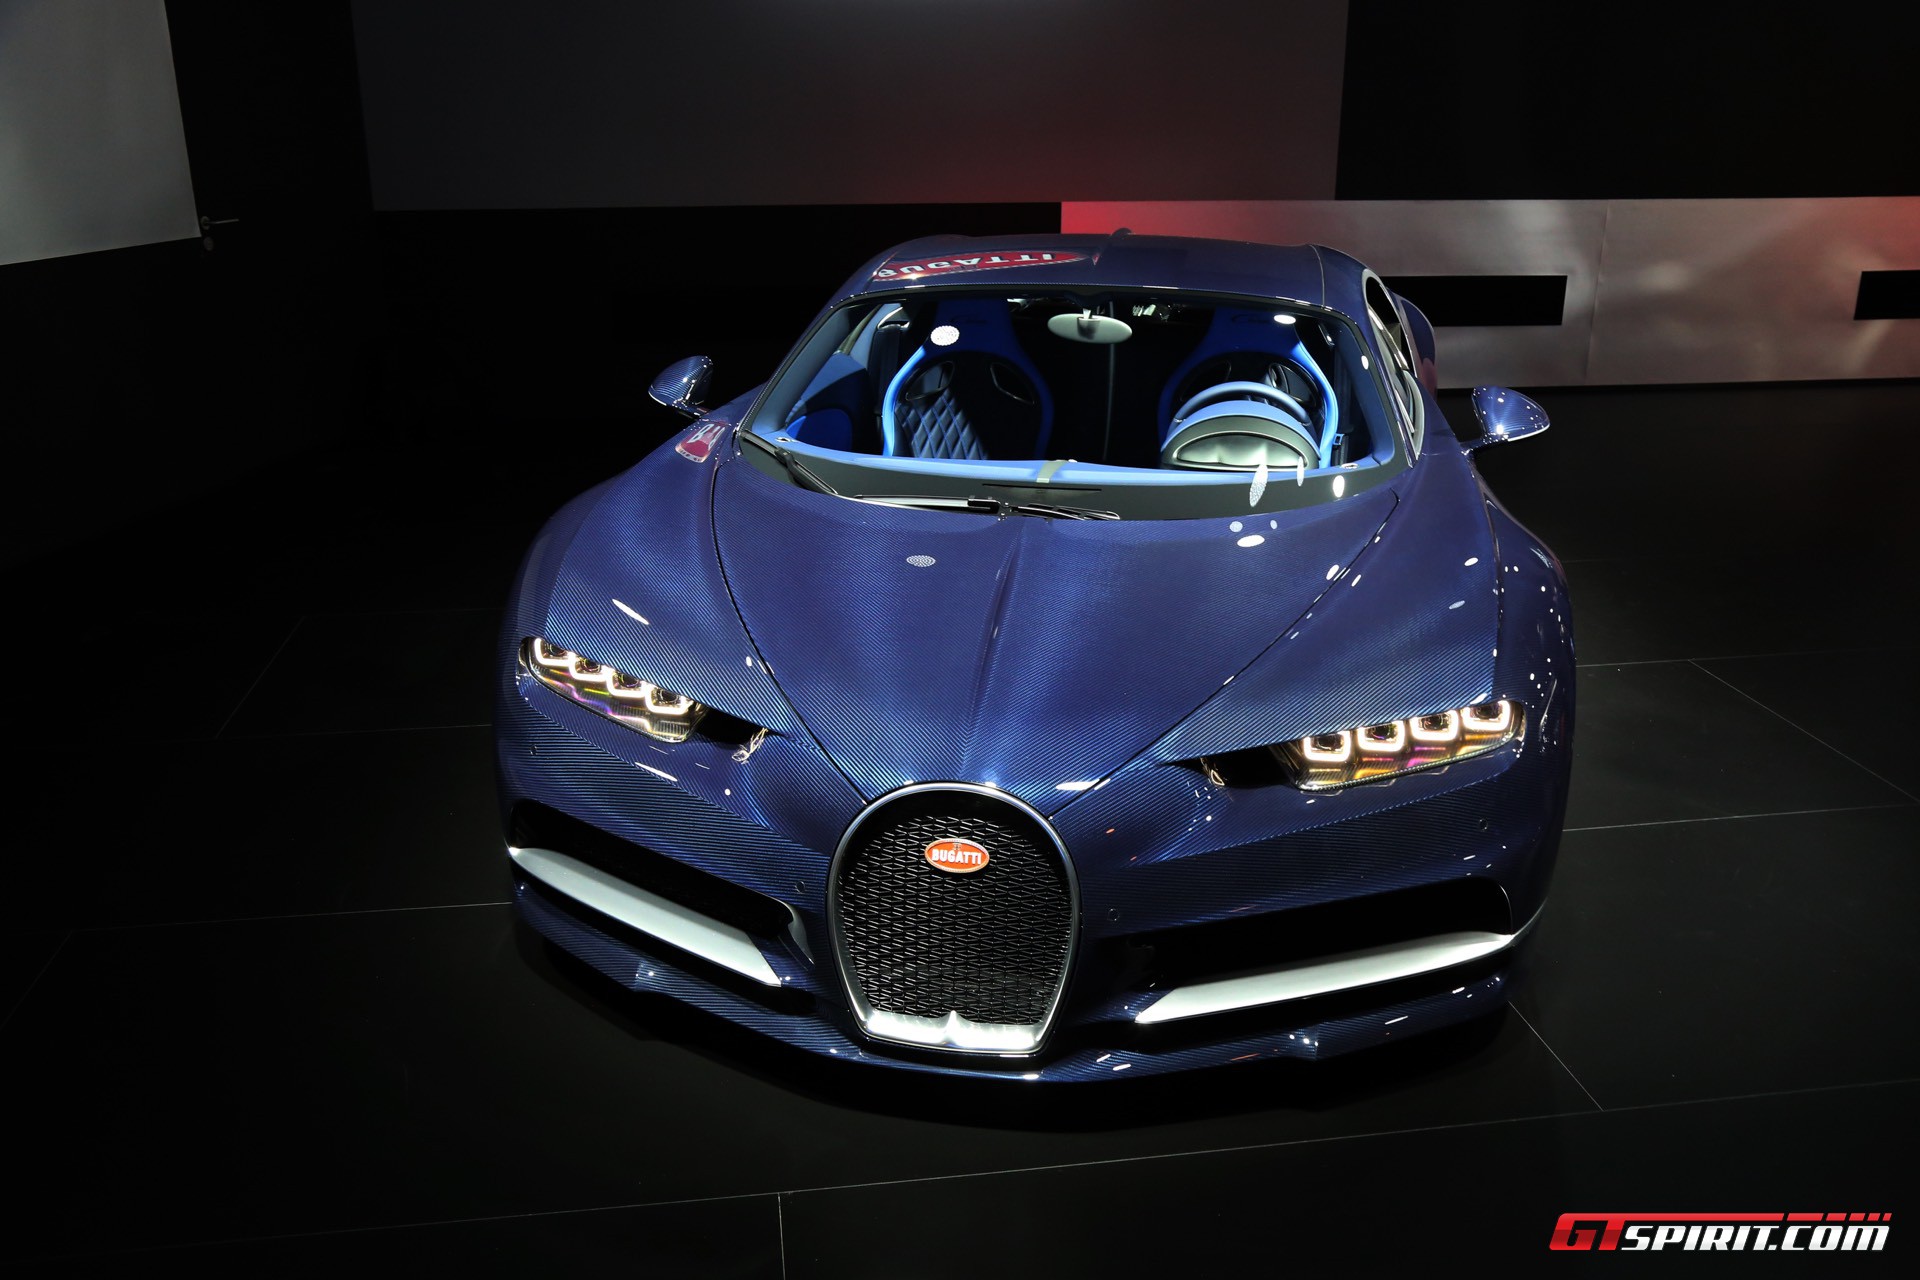 Bugatti Chiron at Geneva